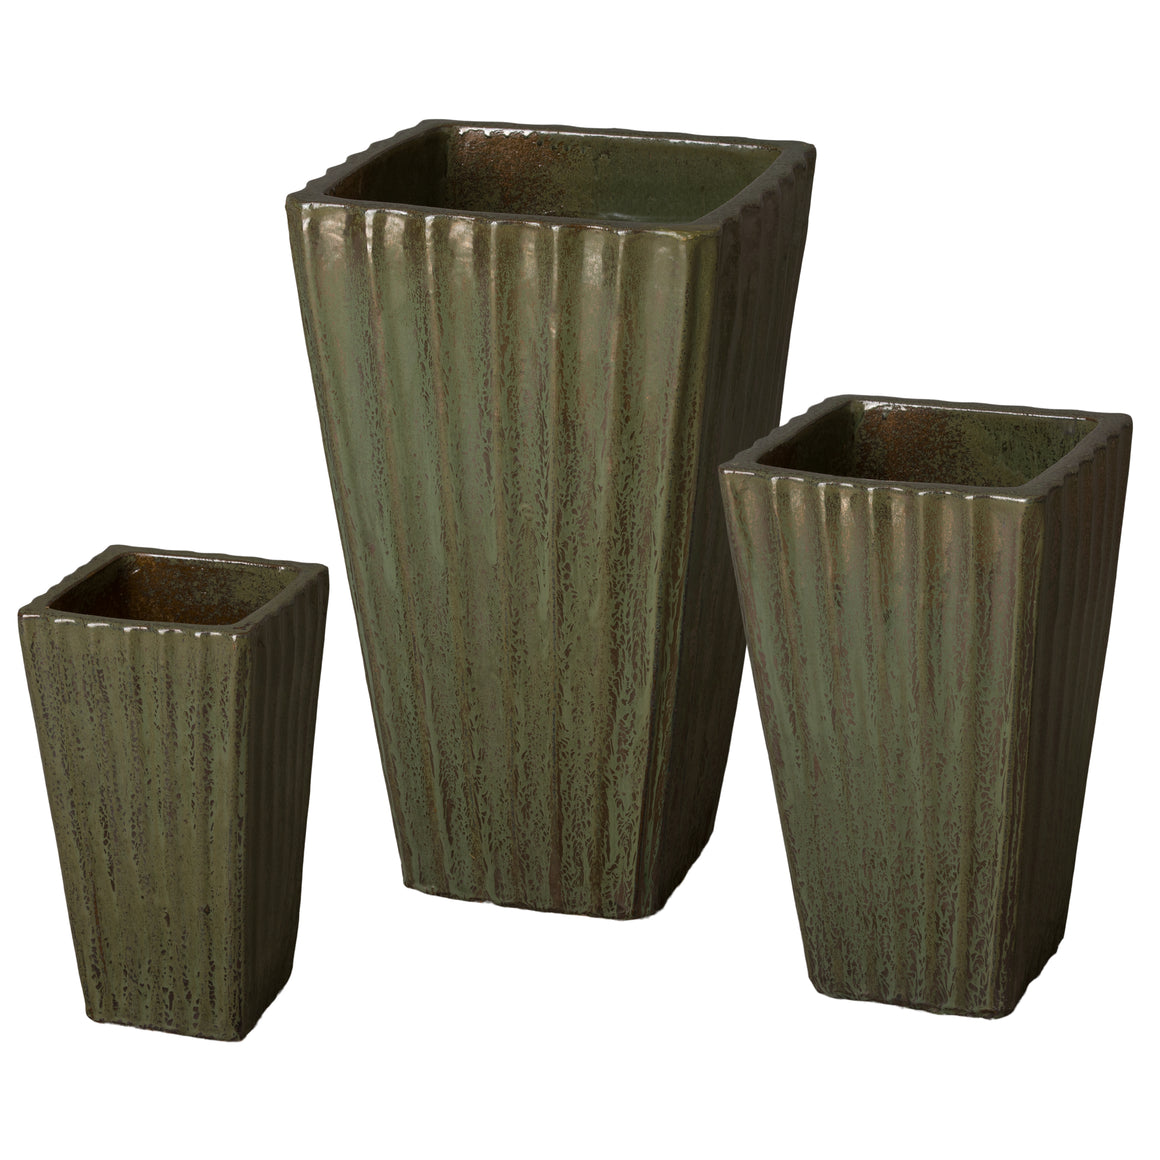 Set of Three Square Planters - Metallic Green Glaze